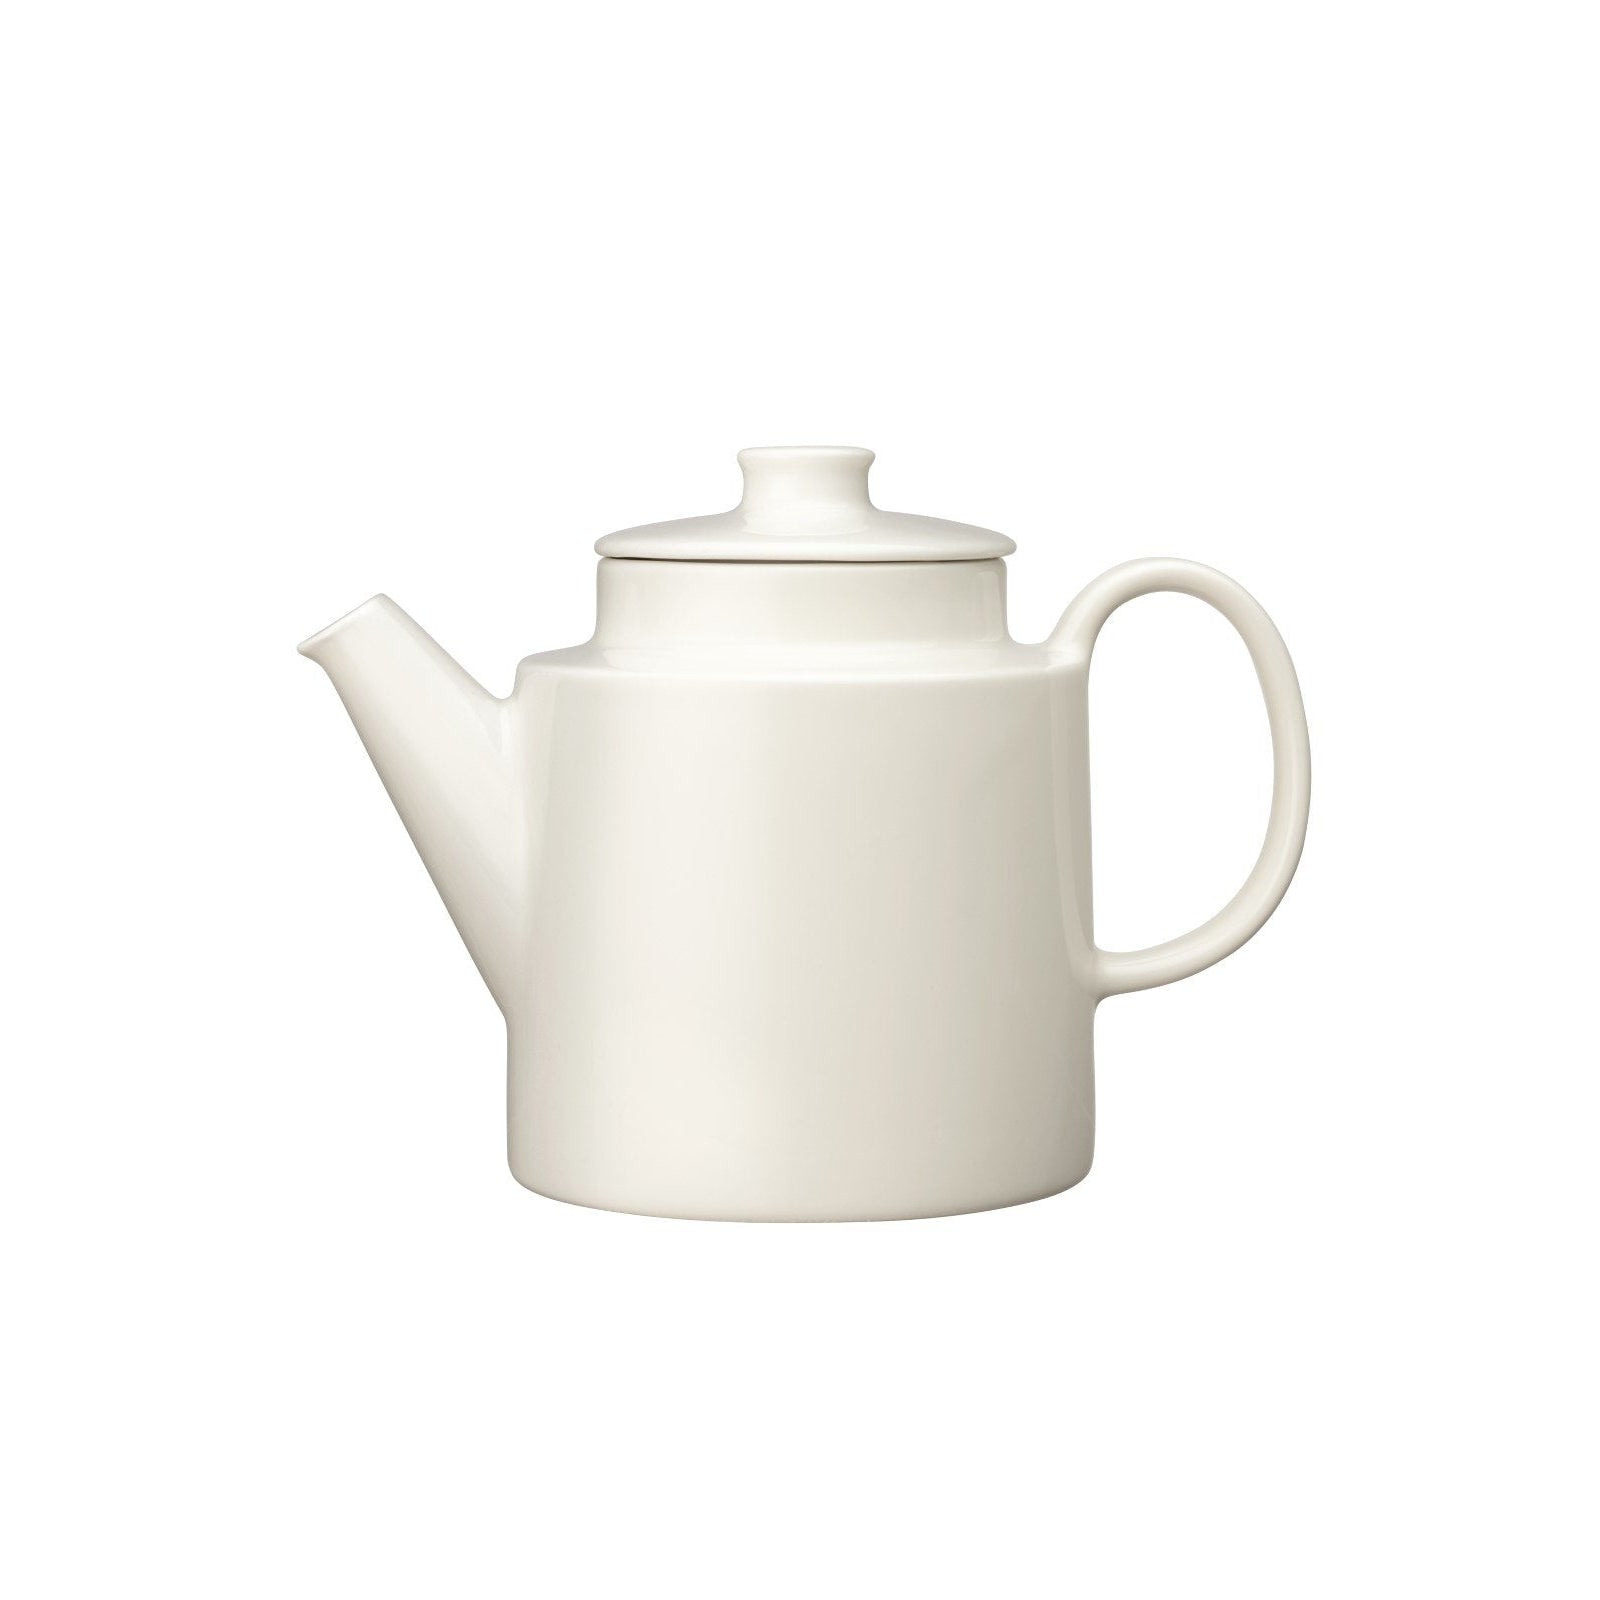 Iittala Teema Teapot White, 1L